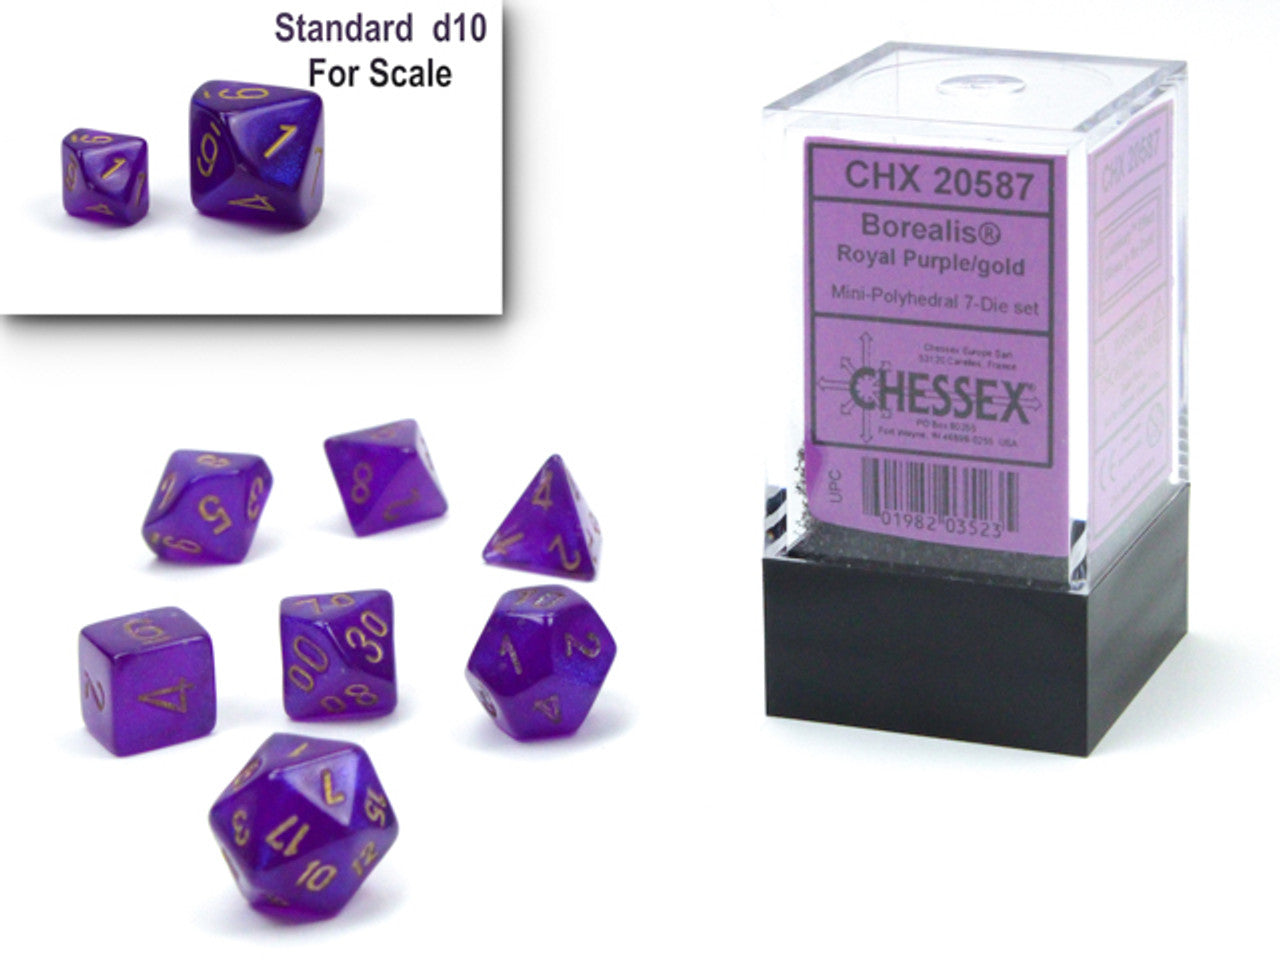 Chessex 20587: Borealis Mini-hedral Royal Purple/gold Luminary 7 Dice Set